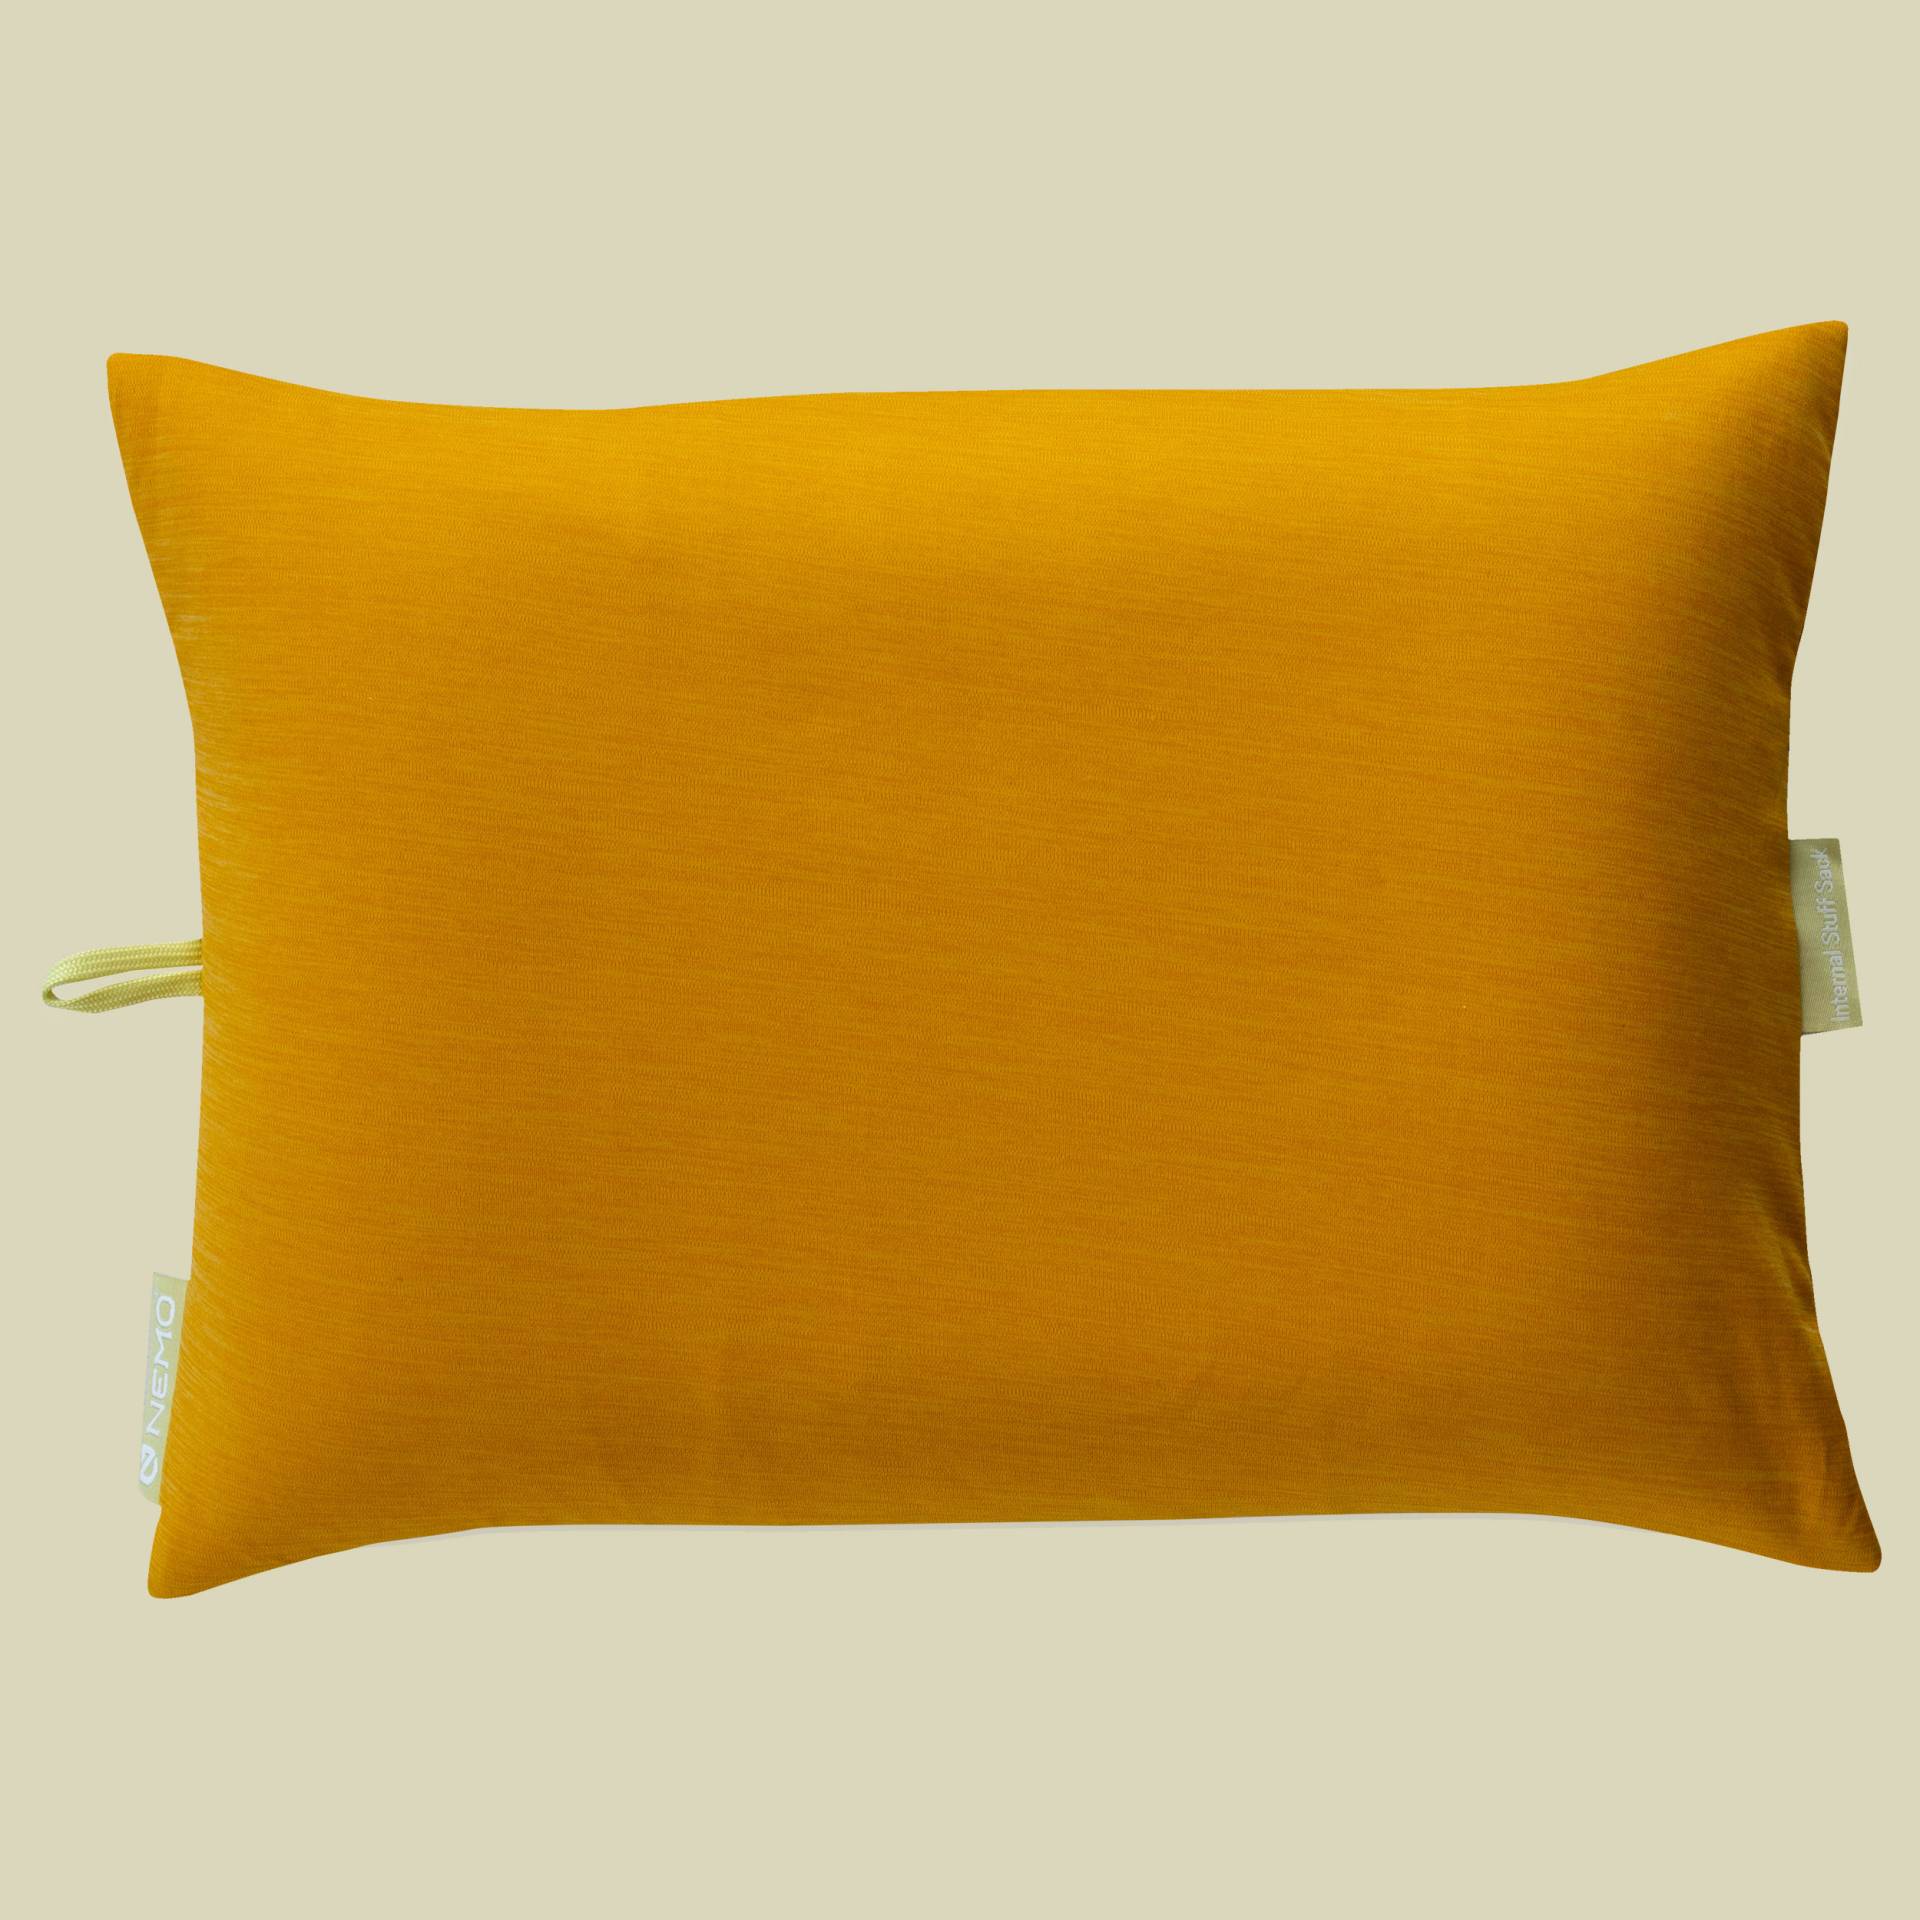 Fillo Elite gelb one size - Farbe mango/citron von Nemo